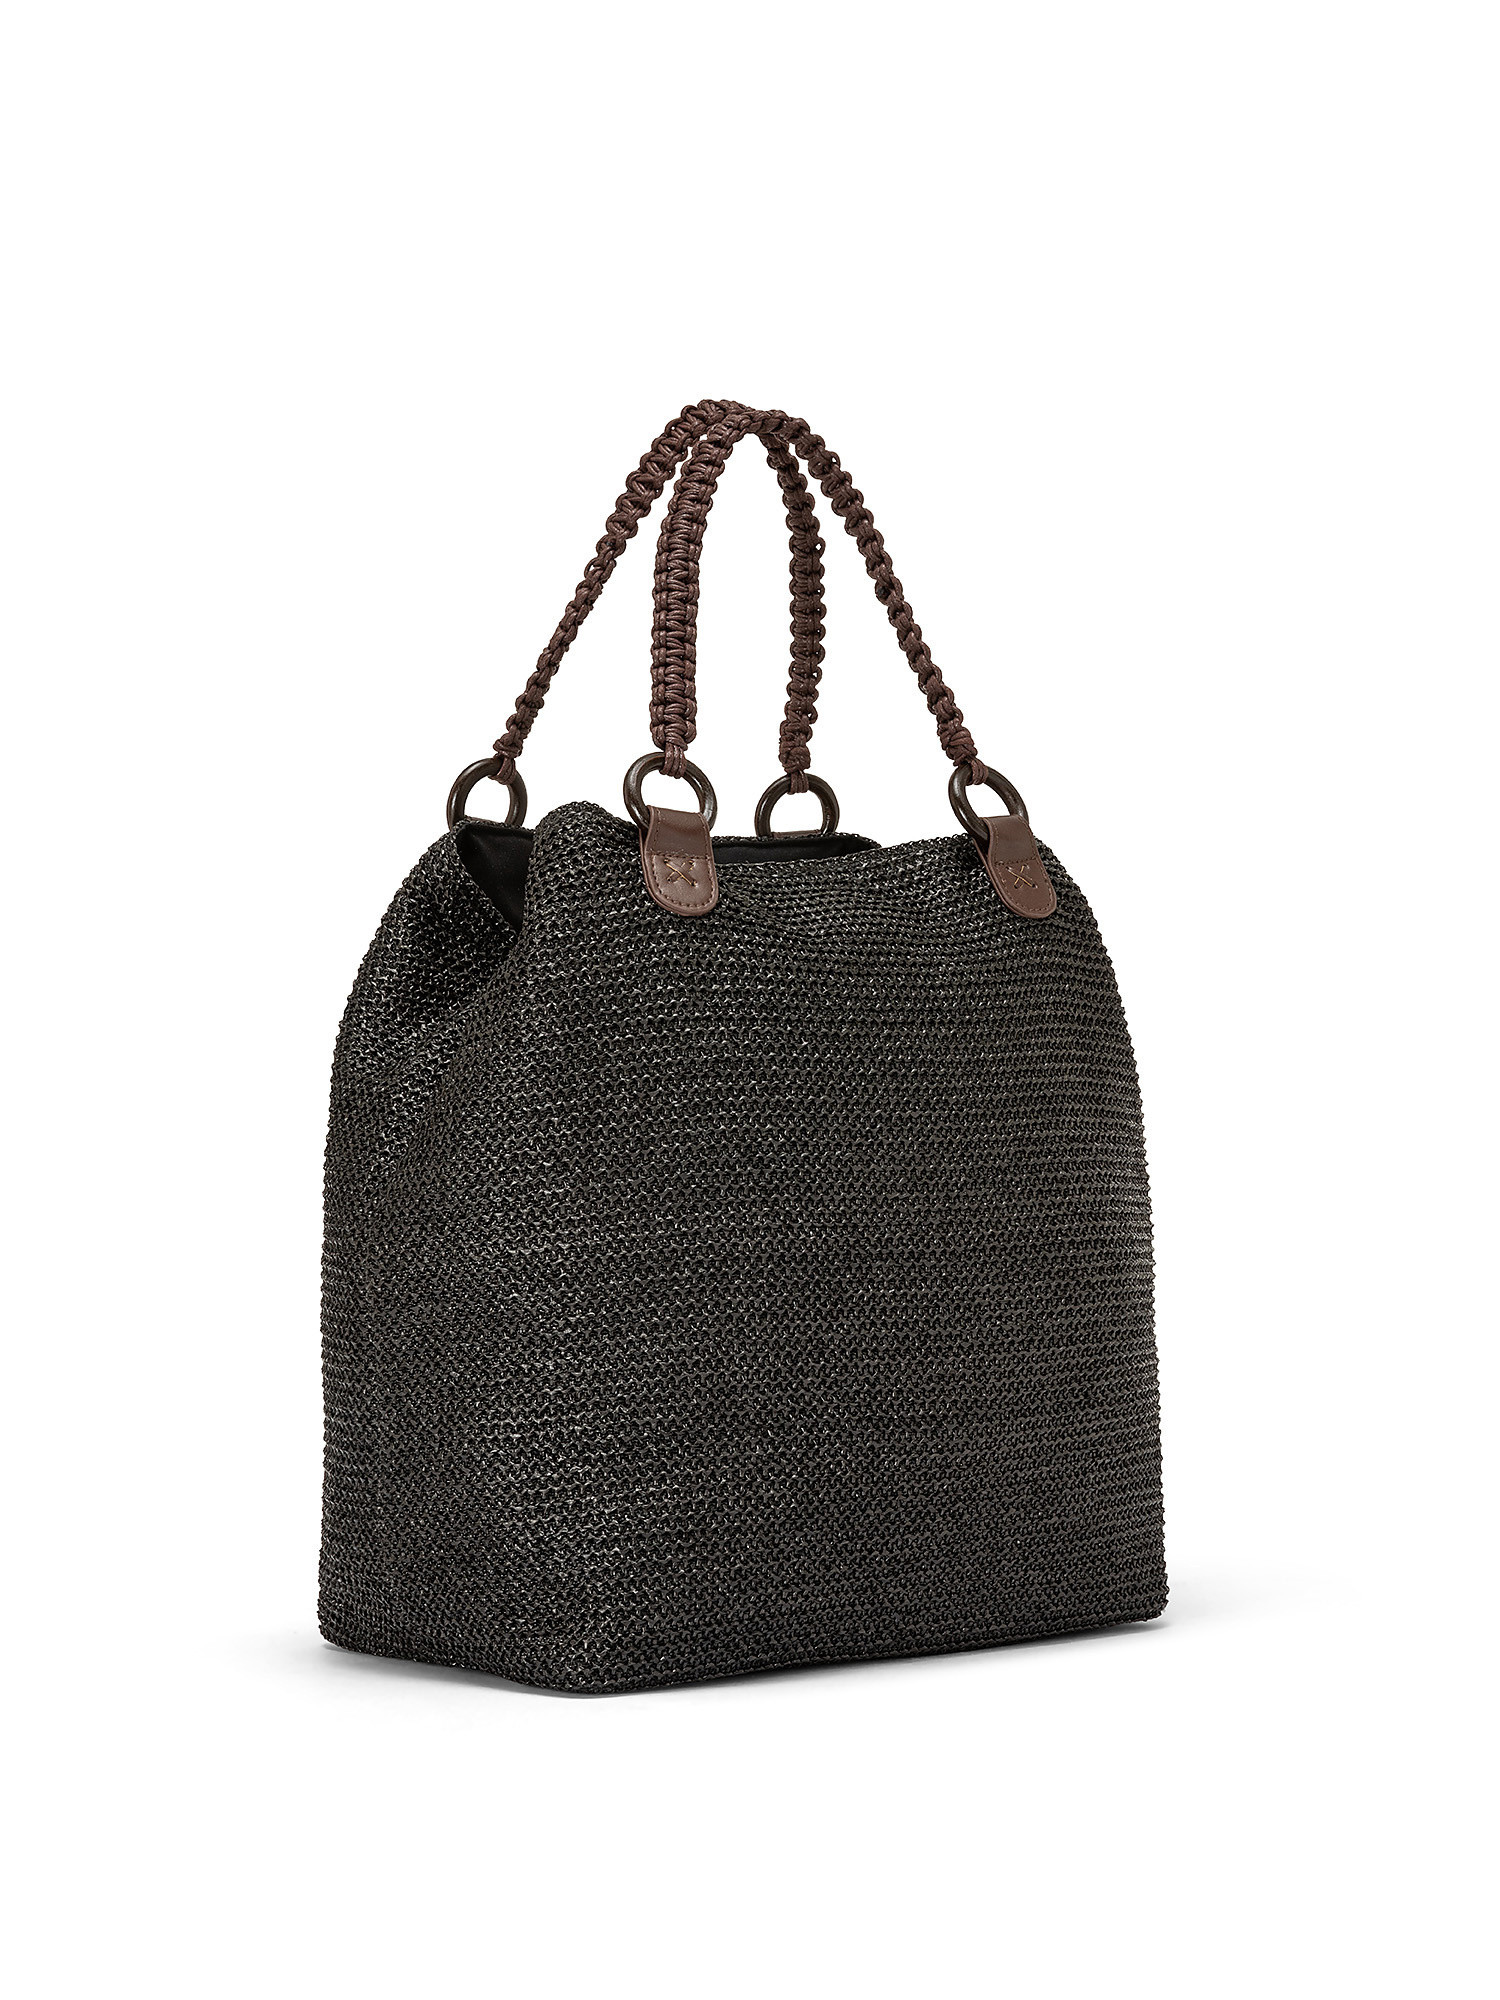 Straw-effect shopping bag, Black, large image number 1